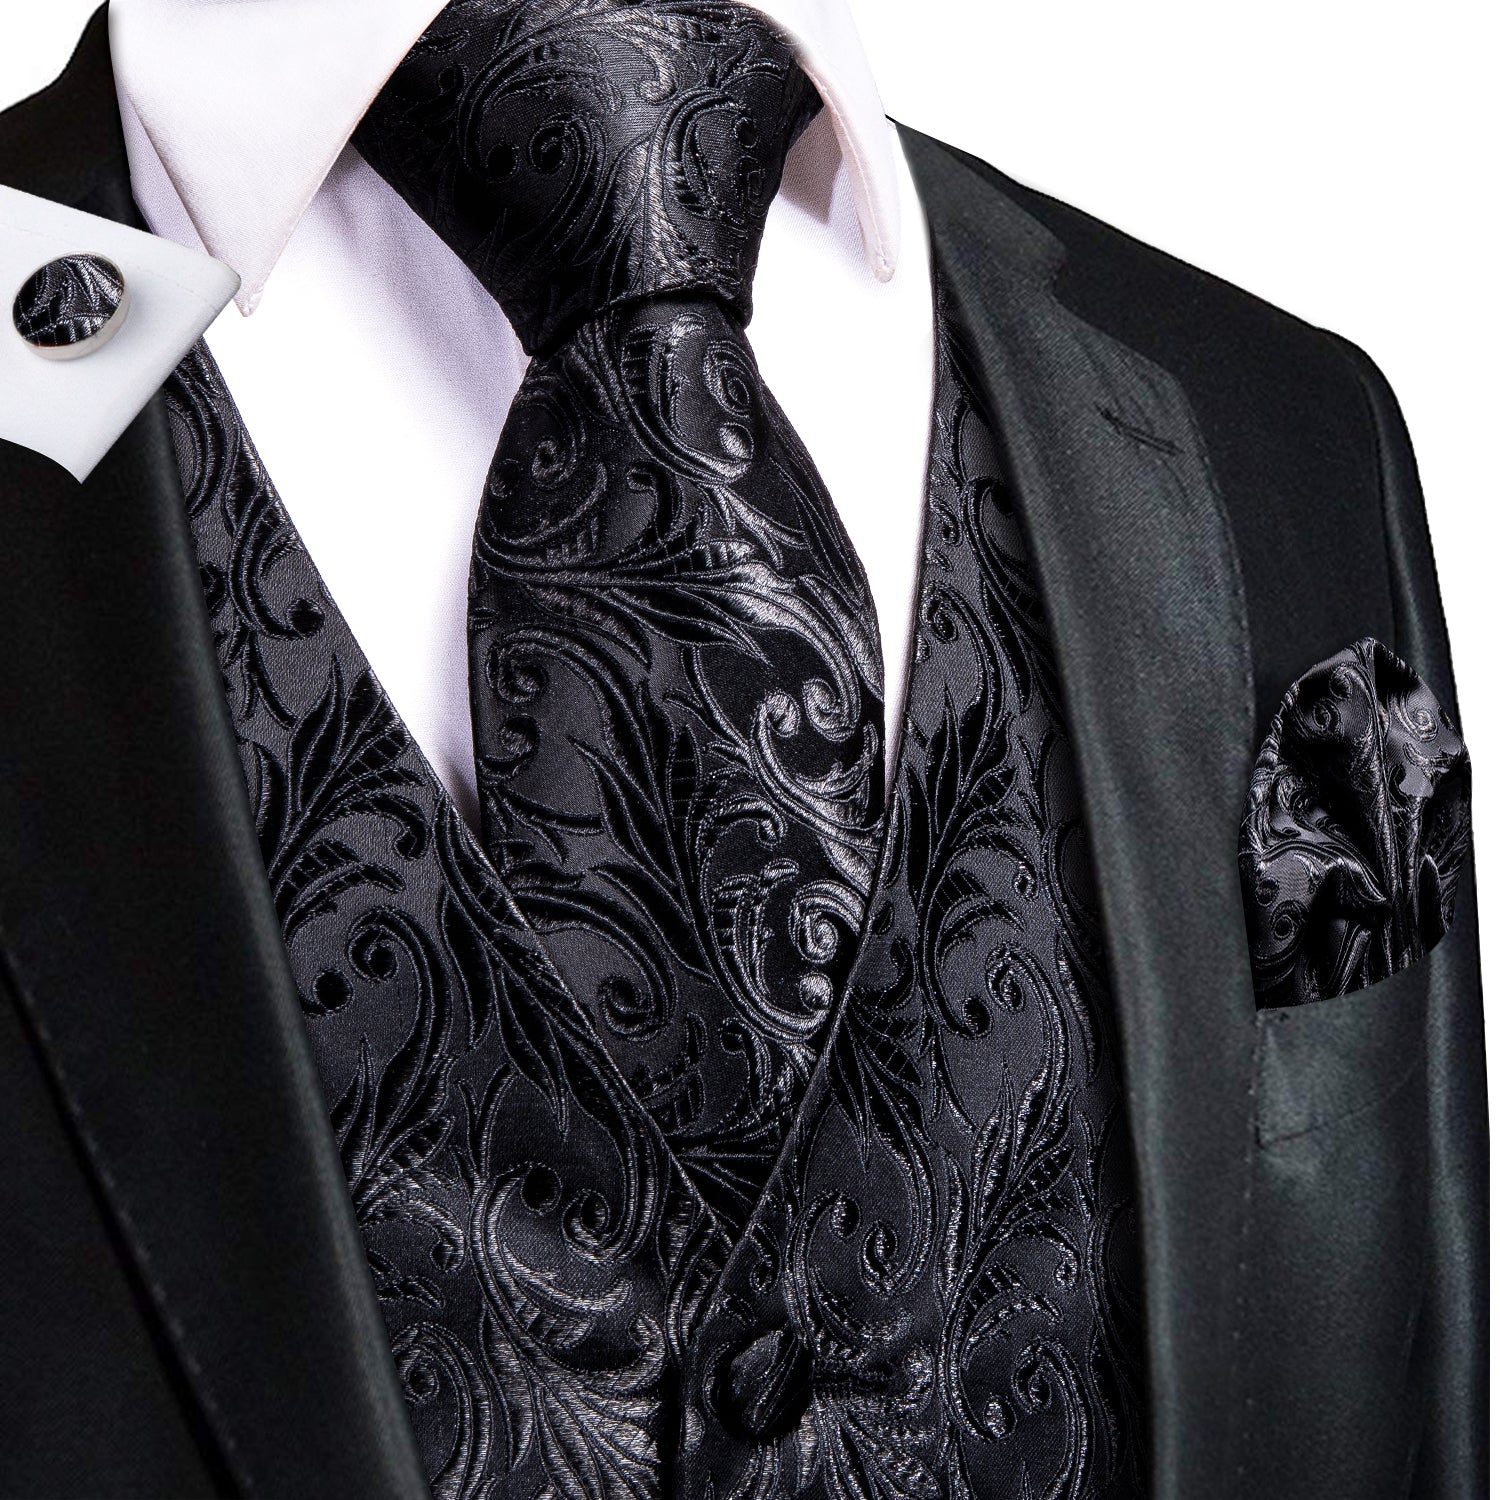 New Black Leaves Silk Men's Vest Hanky Cufflinks Tie Set Waistcoat Suit Set